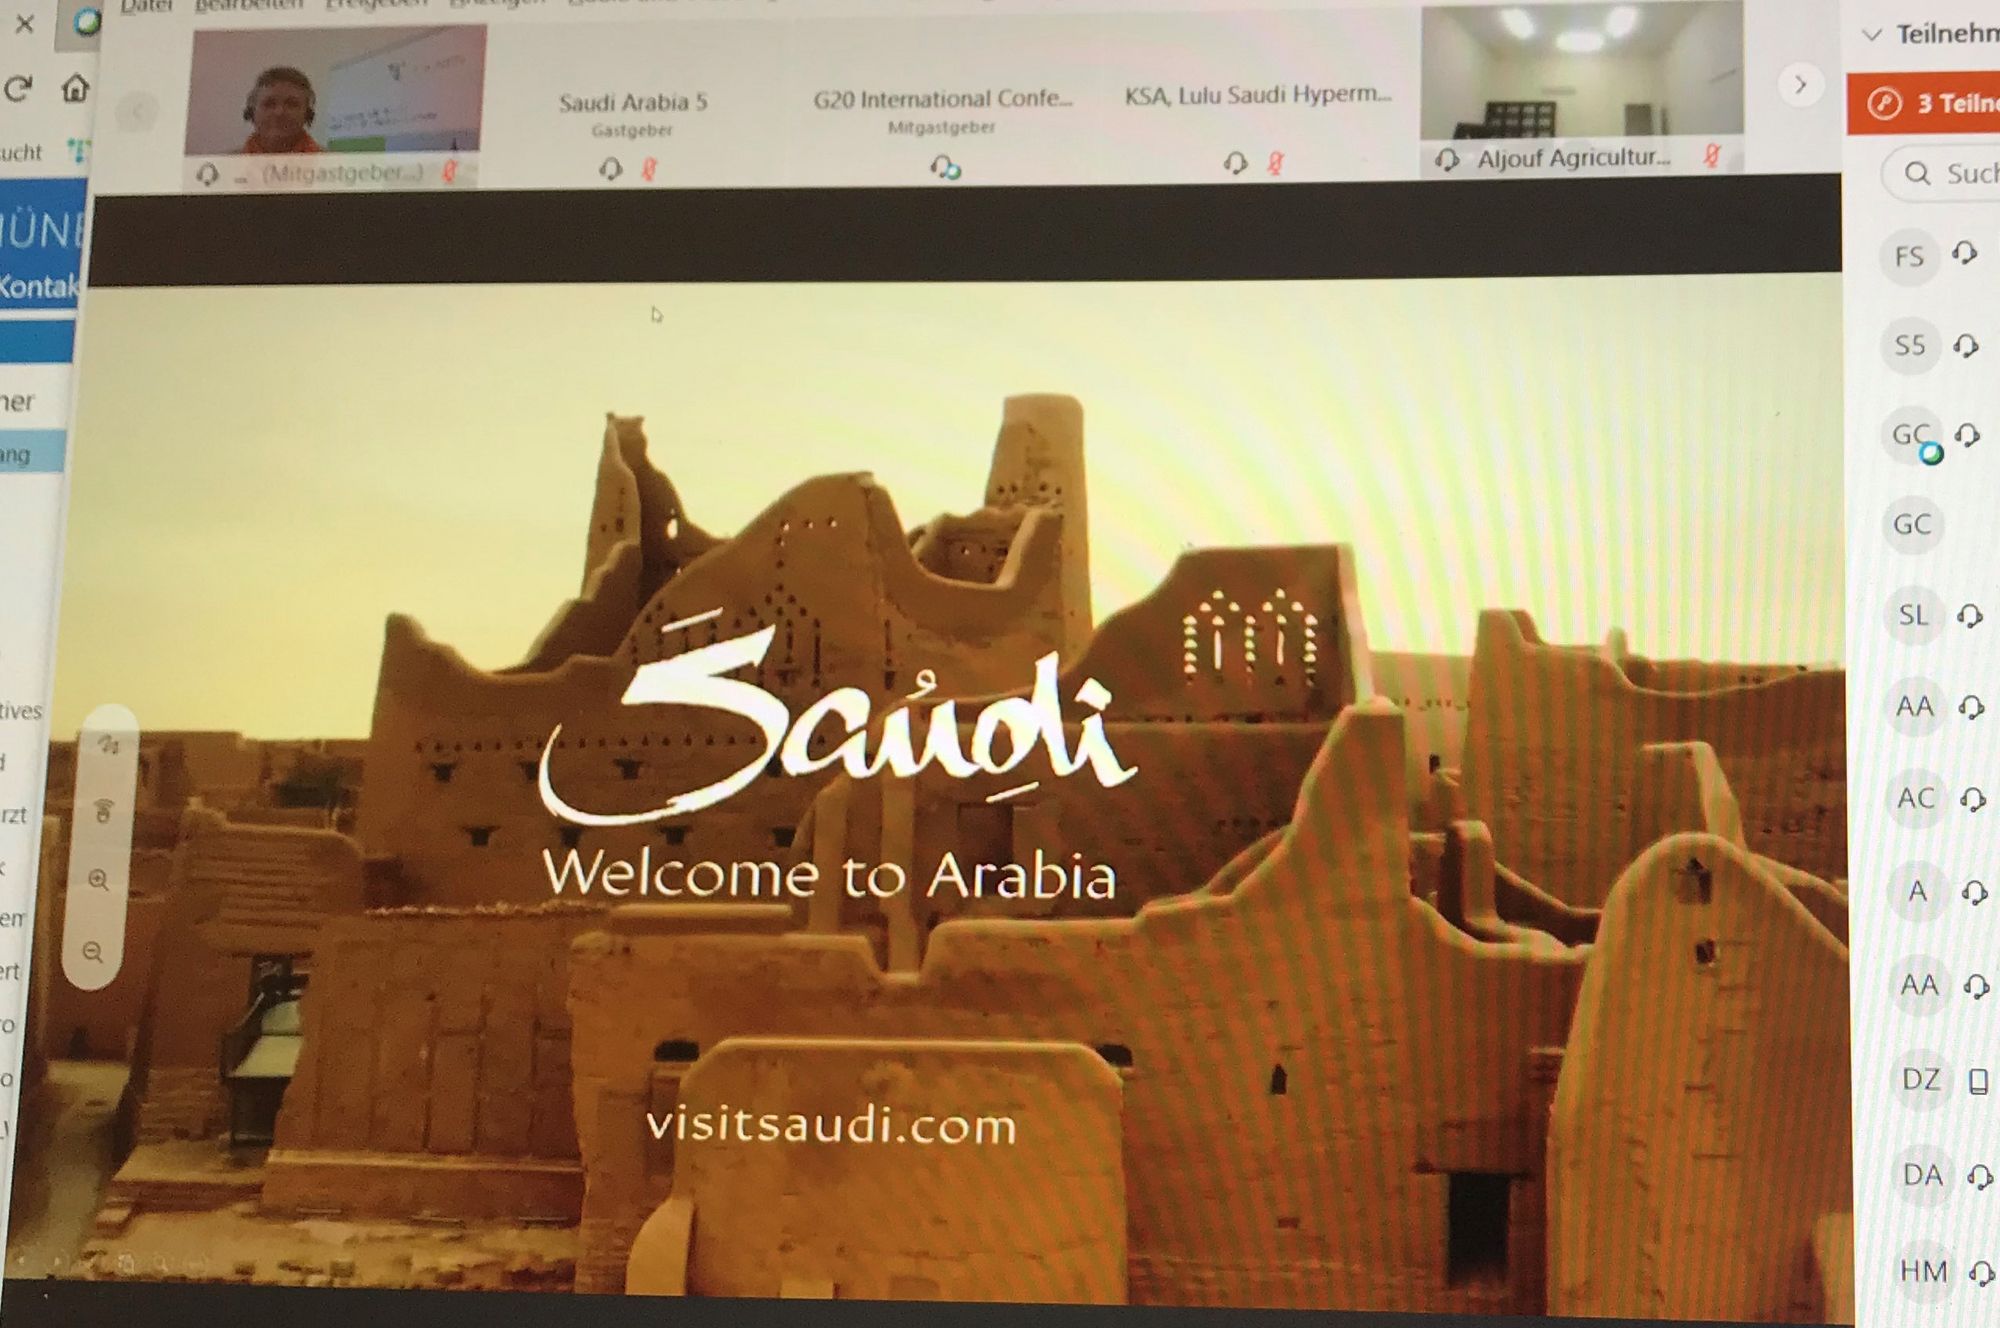 Virtual welcome address by host country Kingdom of Saudi Arabia.